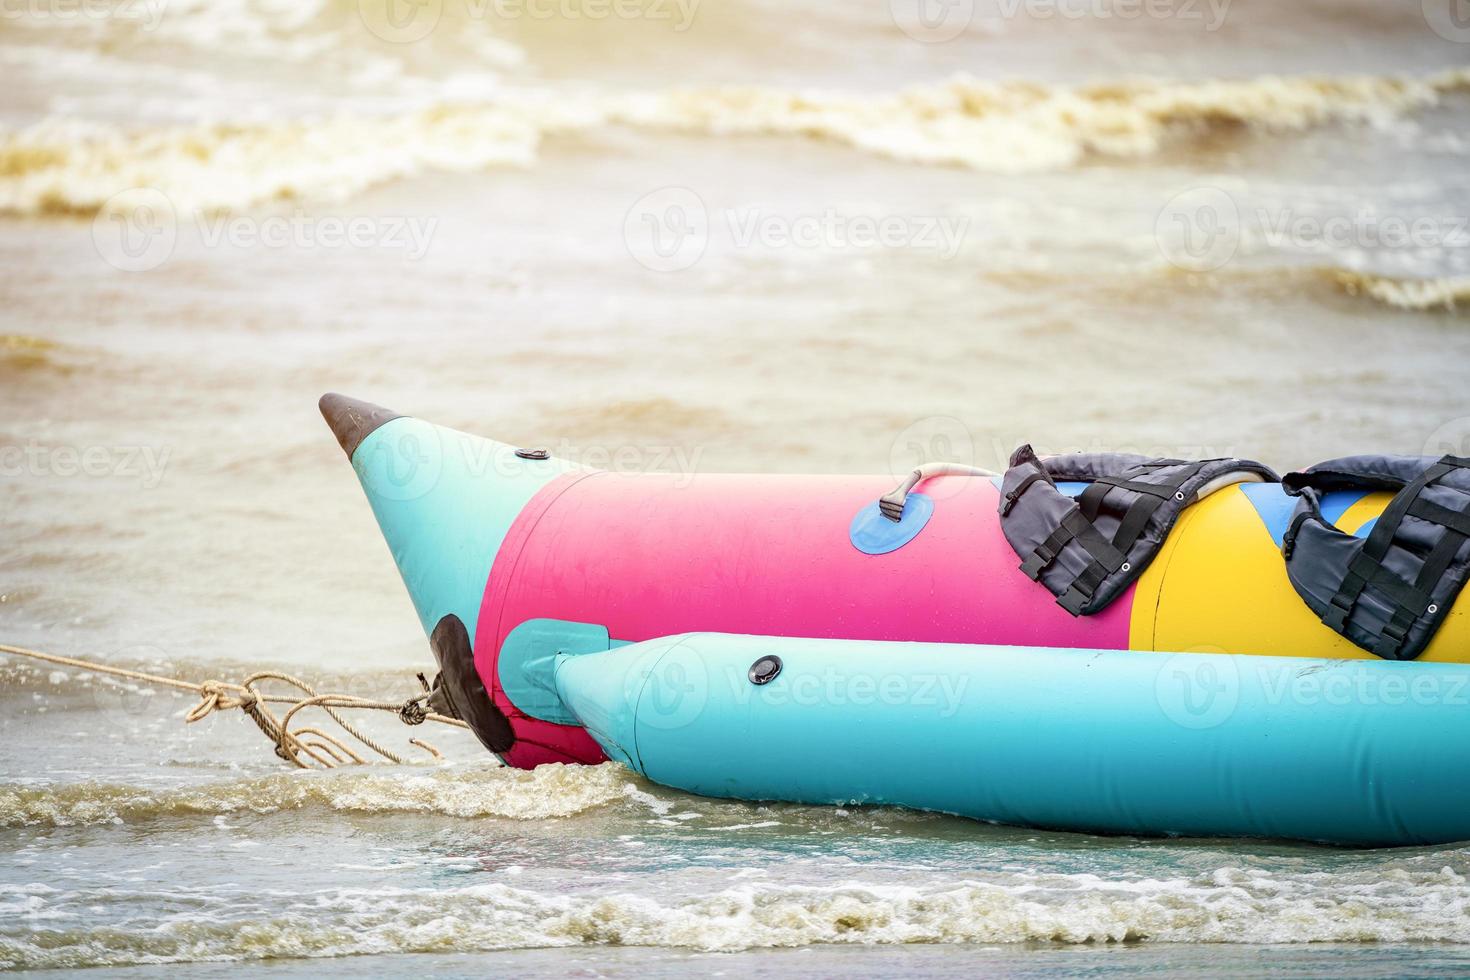 Banana Boat on the beach, Chonburi Province, Thailand photo